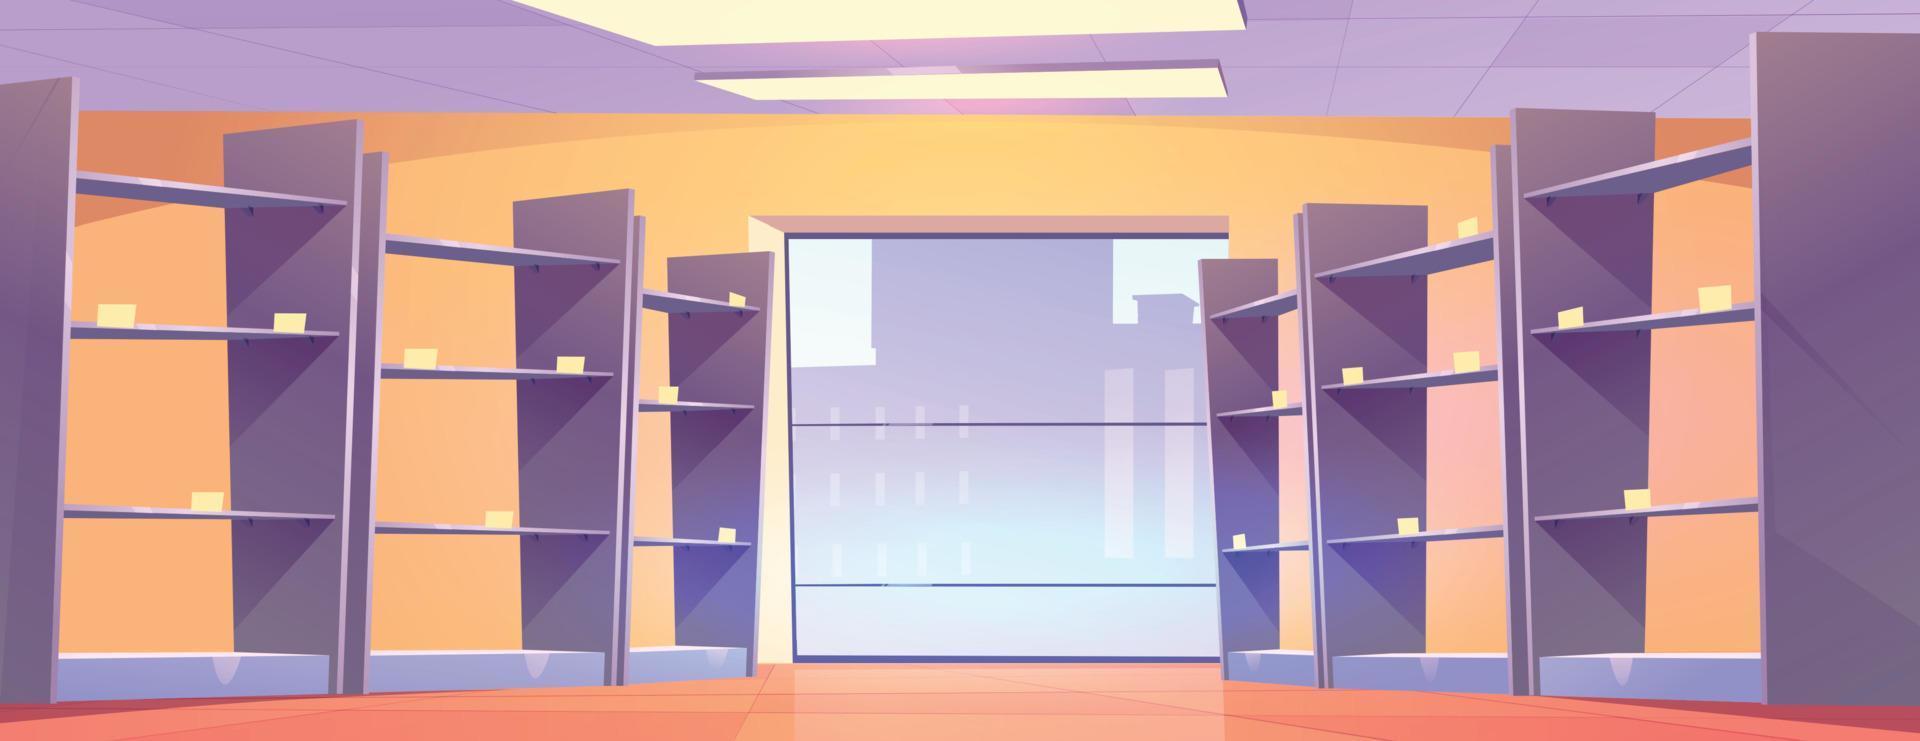 Empty supermarket aisle shelf cartoon background vector